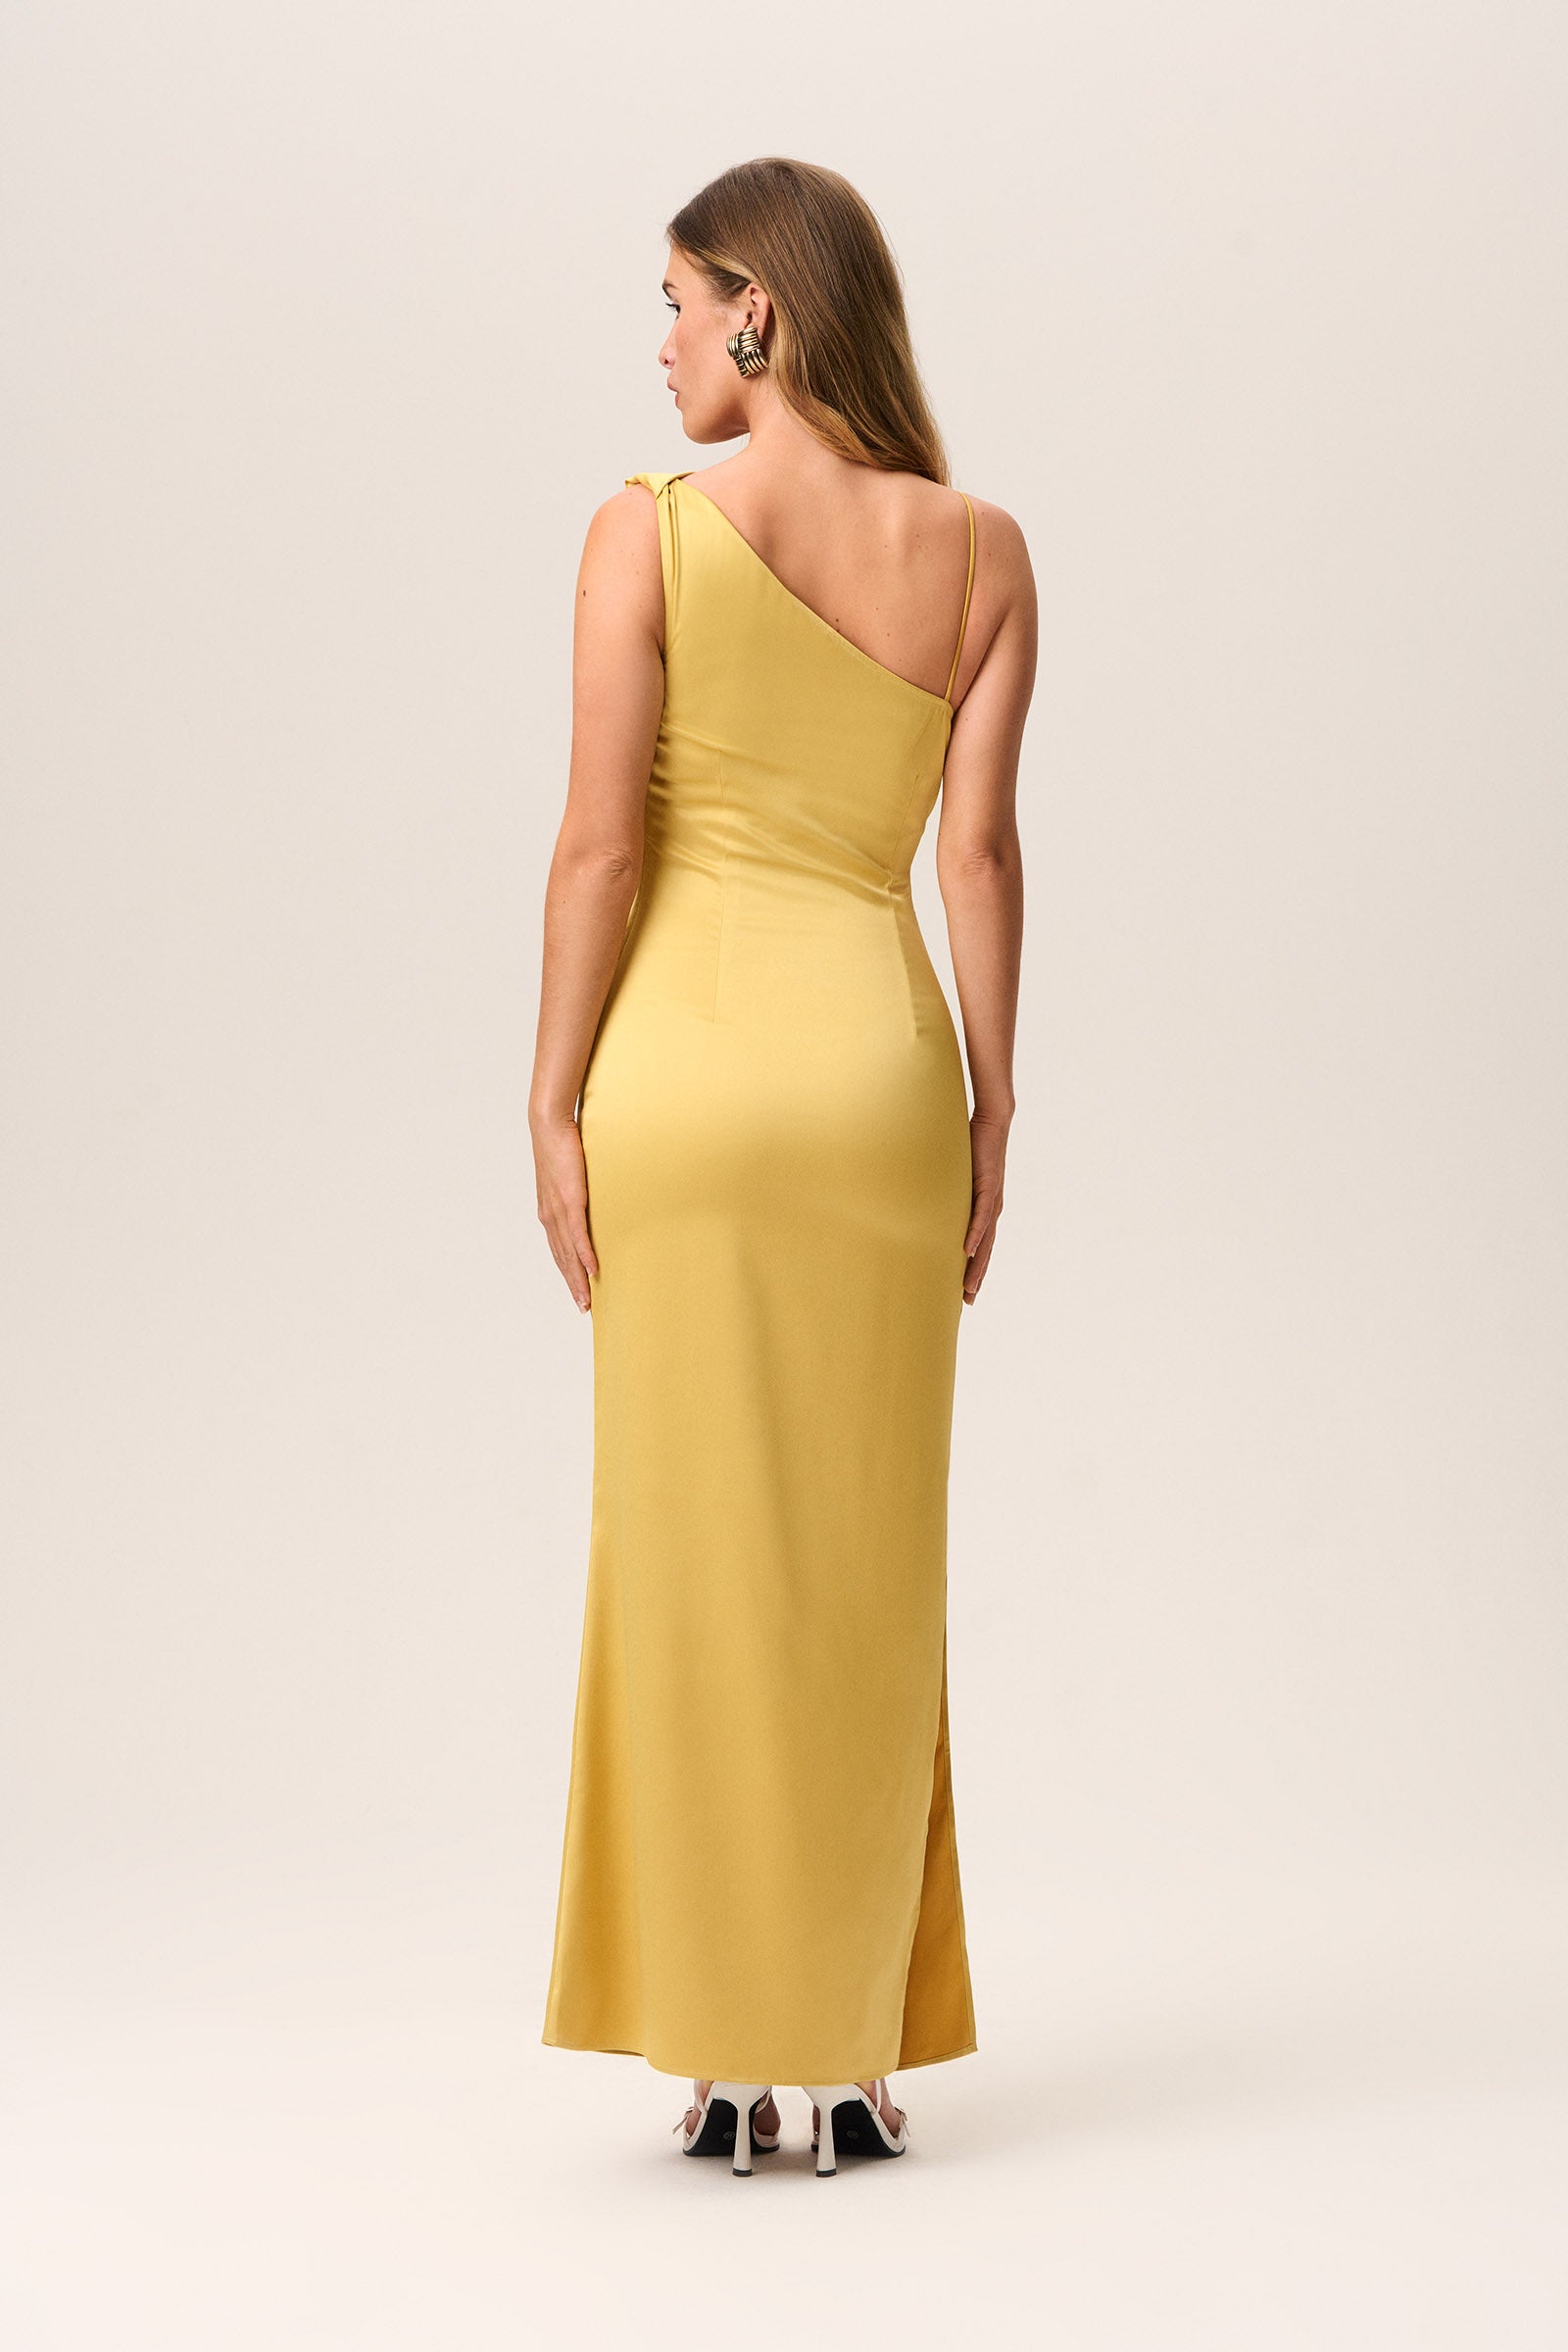 Almeria Dress (Delivery week 9-10) image